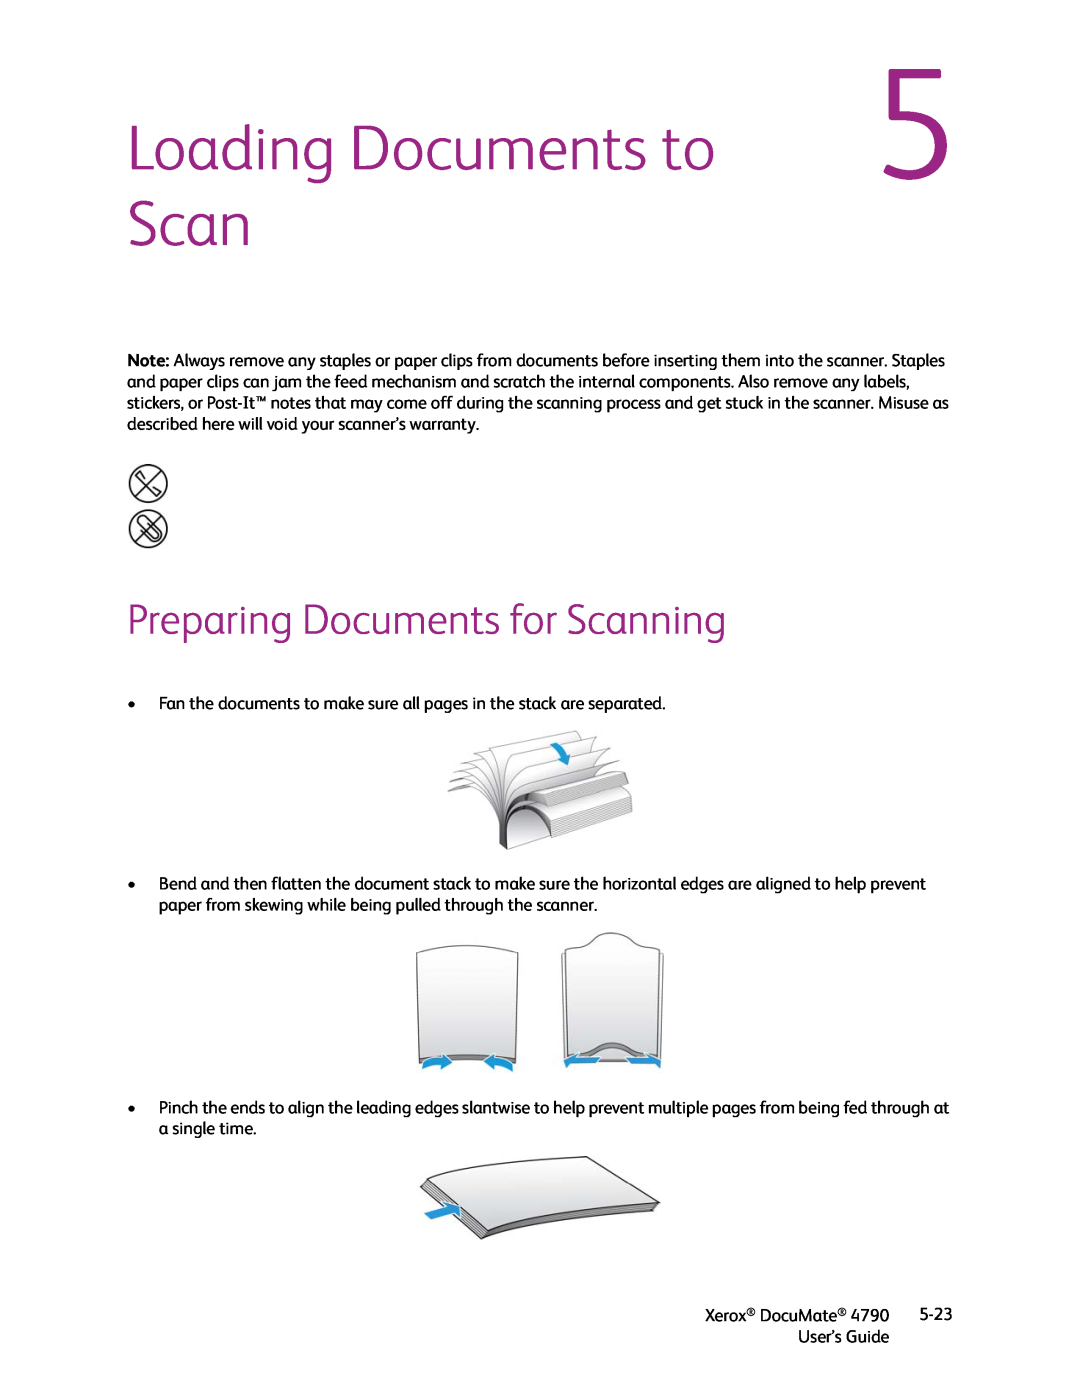 Xerox xerox documate manual Loading Documents to, Preparing Documents for Scanning 